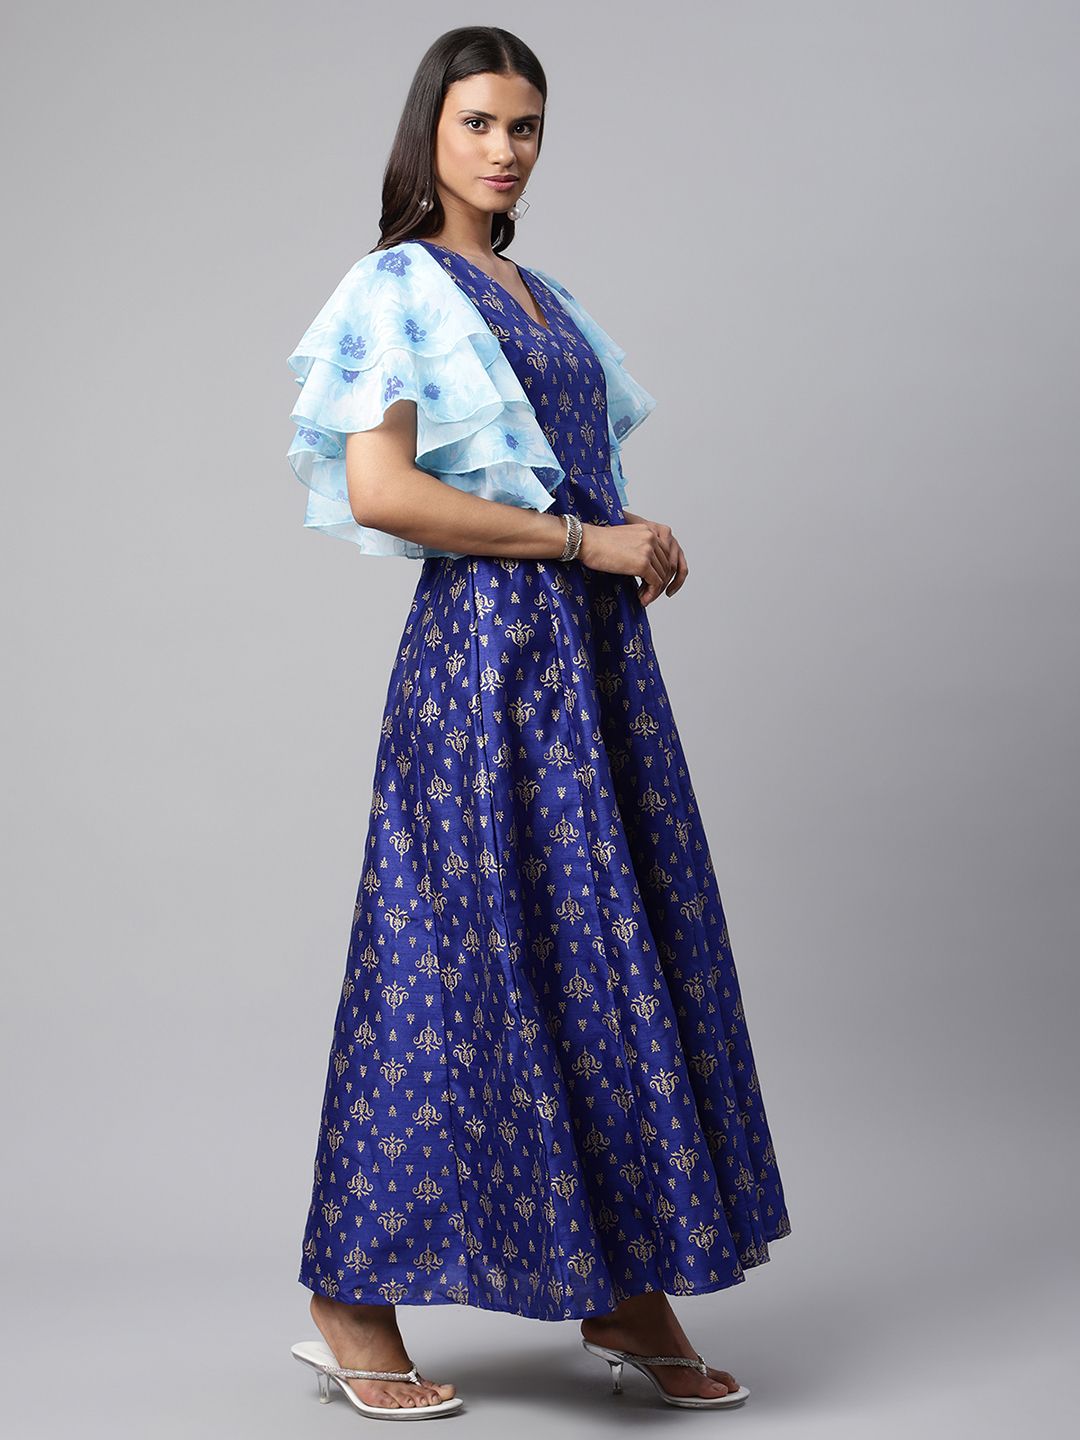 Royal Blue Poly Silk Gold Paste Printed Dress